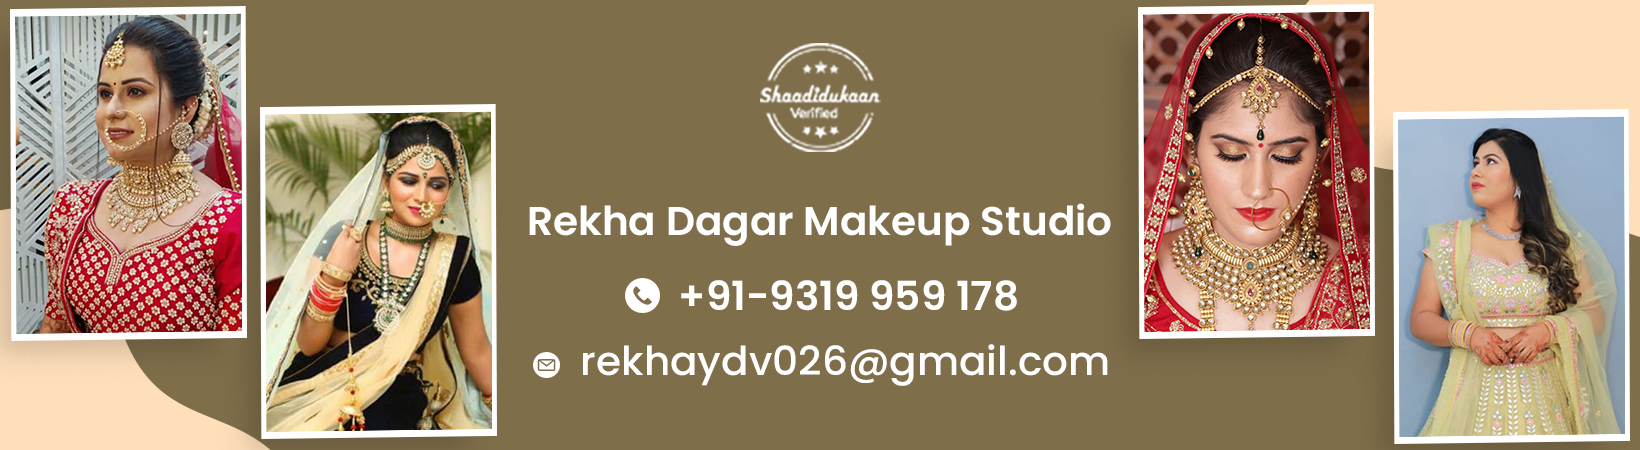 rekha-dagar-makeup-studio